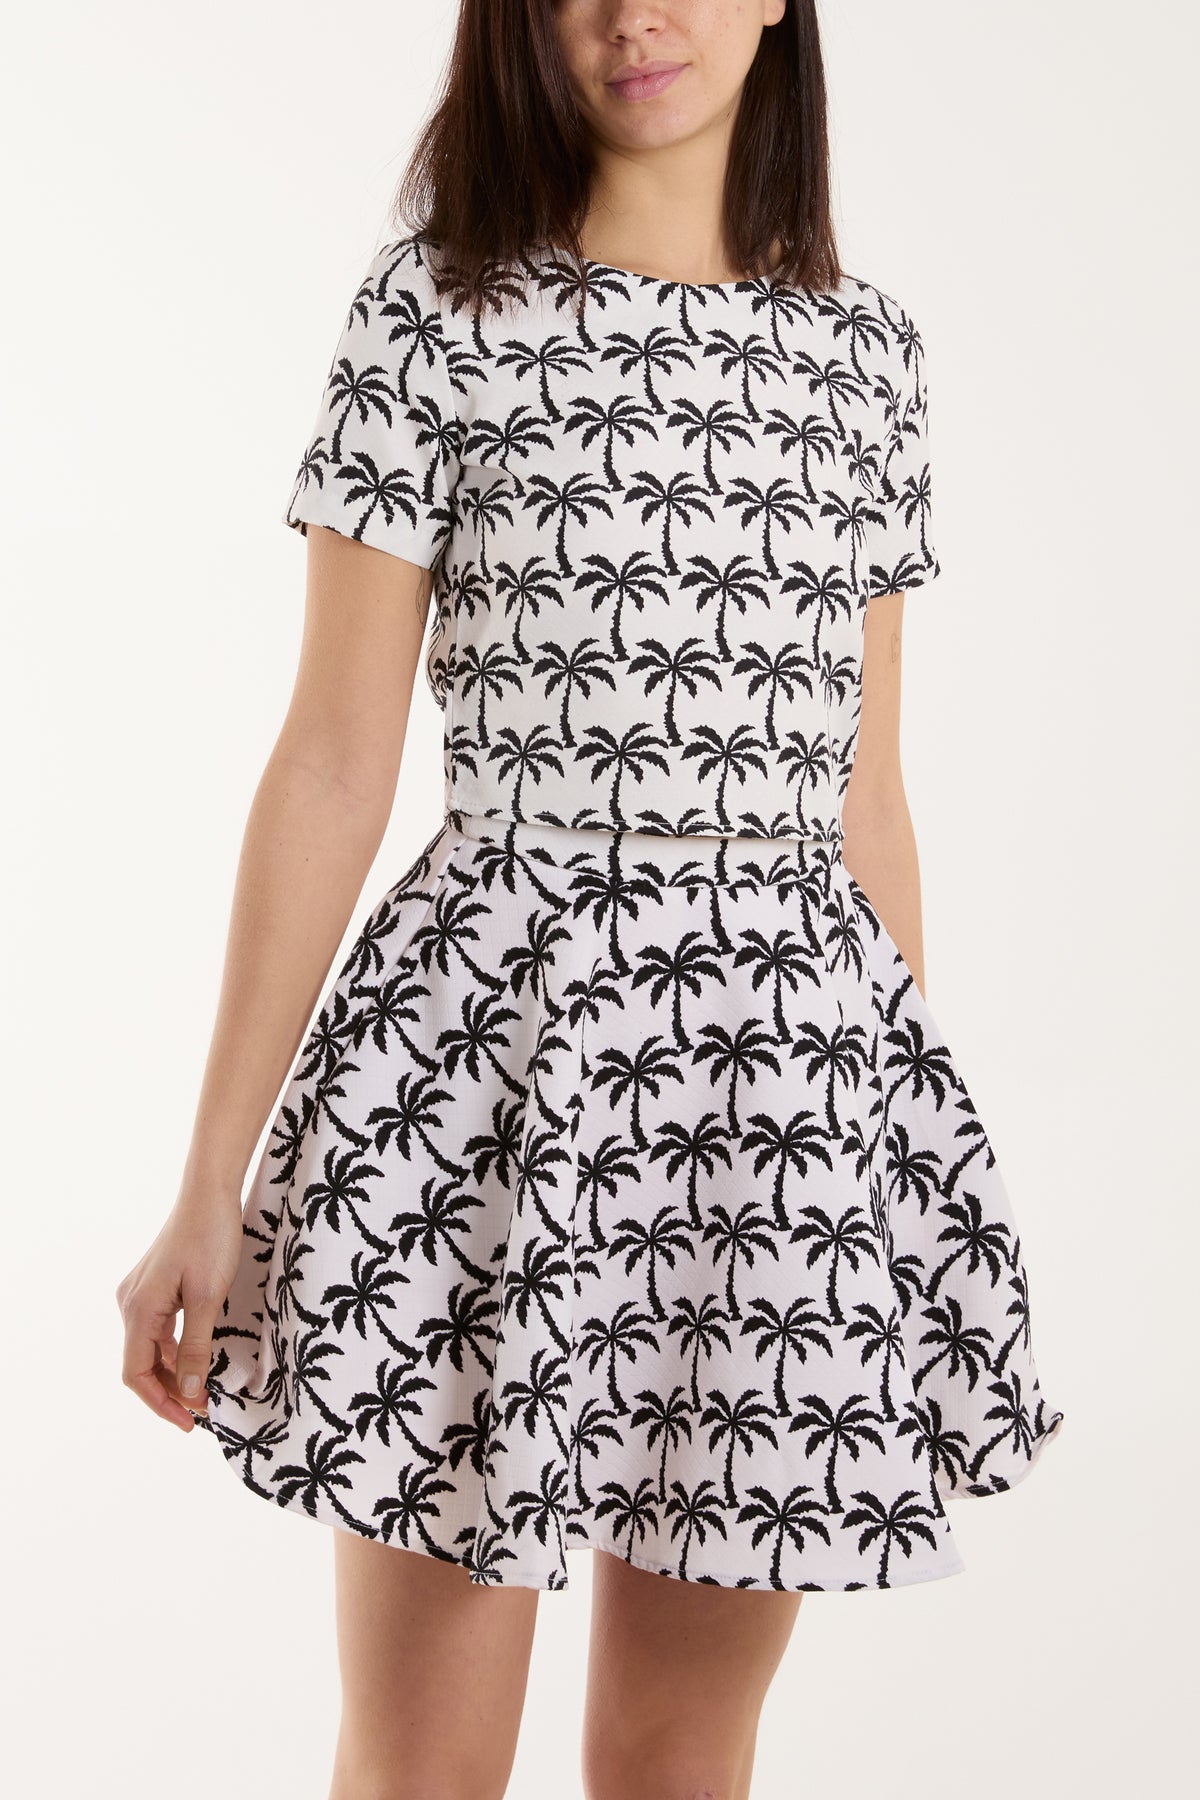 Palm Print Textured Skirt & Top Set